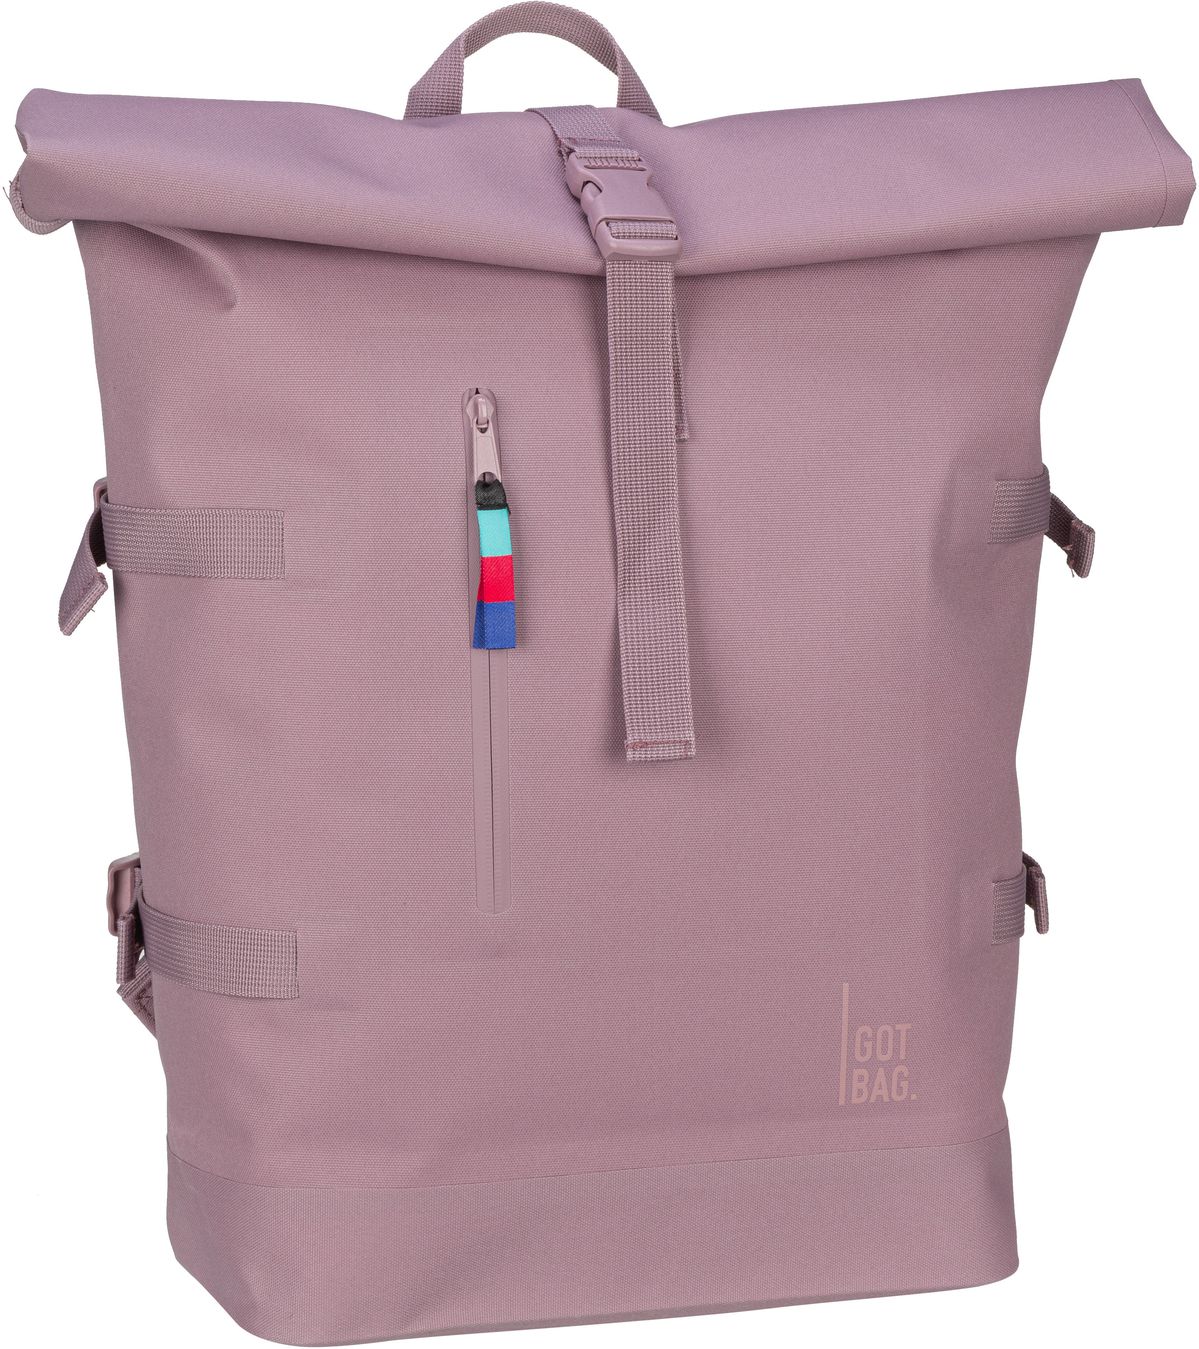 GOT BAG Rolltop Backpack - Calamary